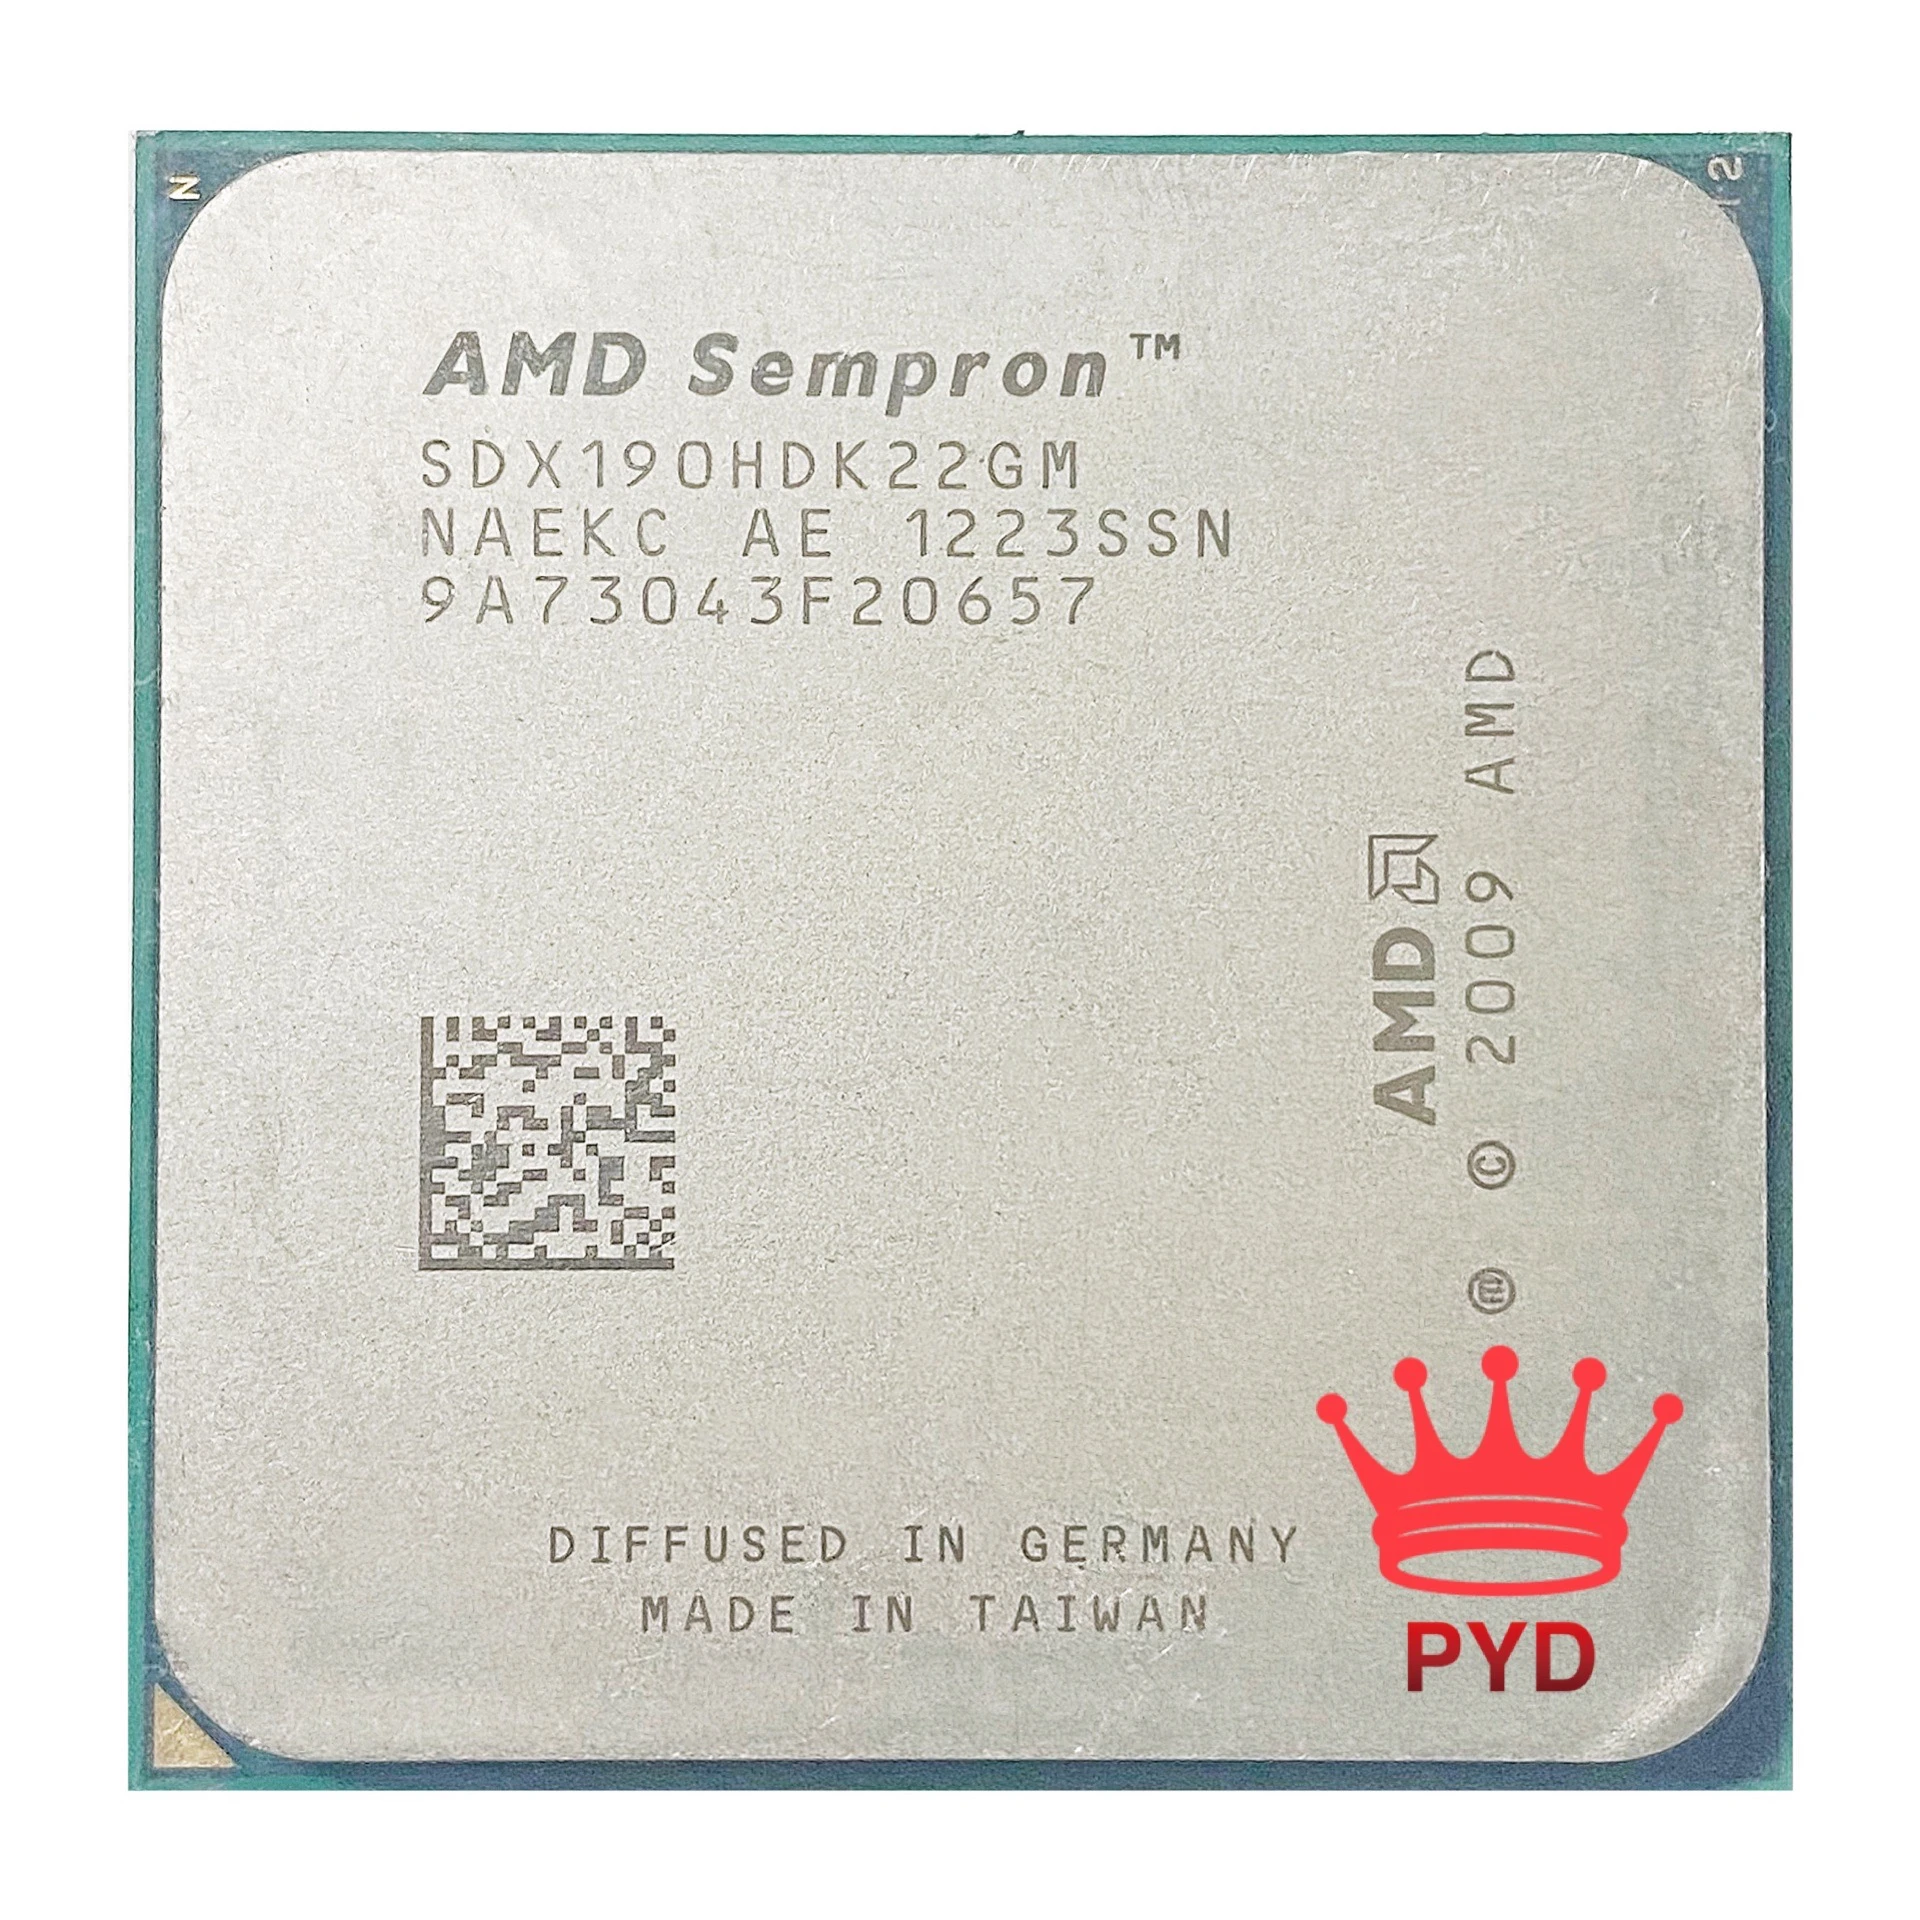 AMD Sempron X2 190 2.5 GHz Dual-Core CPU Processor SDX190HDK22GM Socket AM3 latest processor